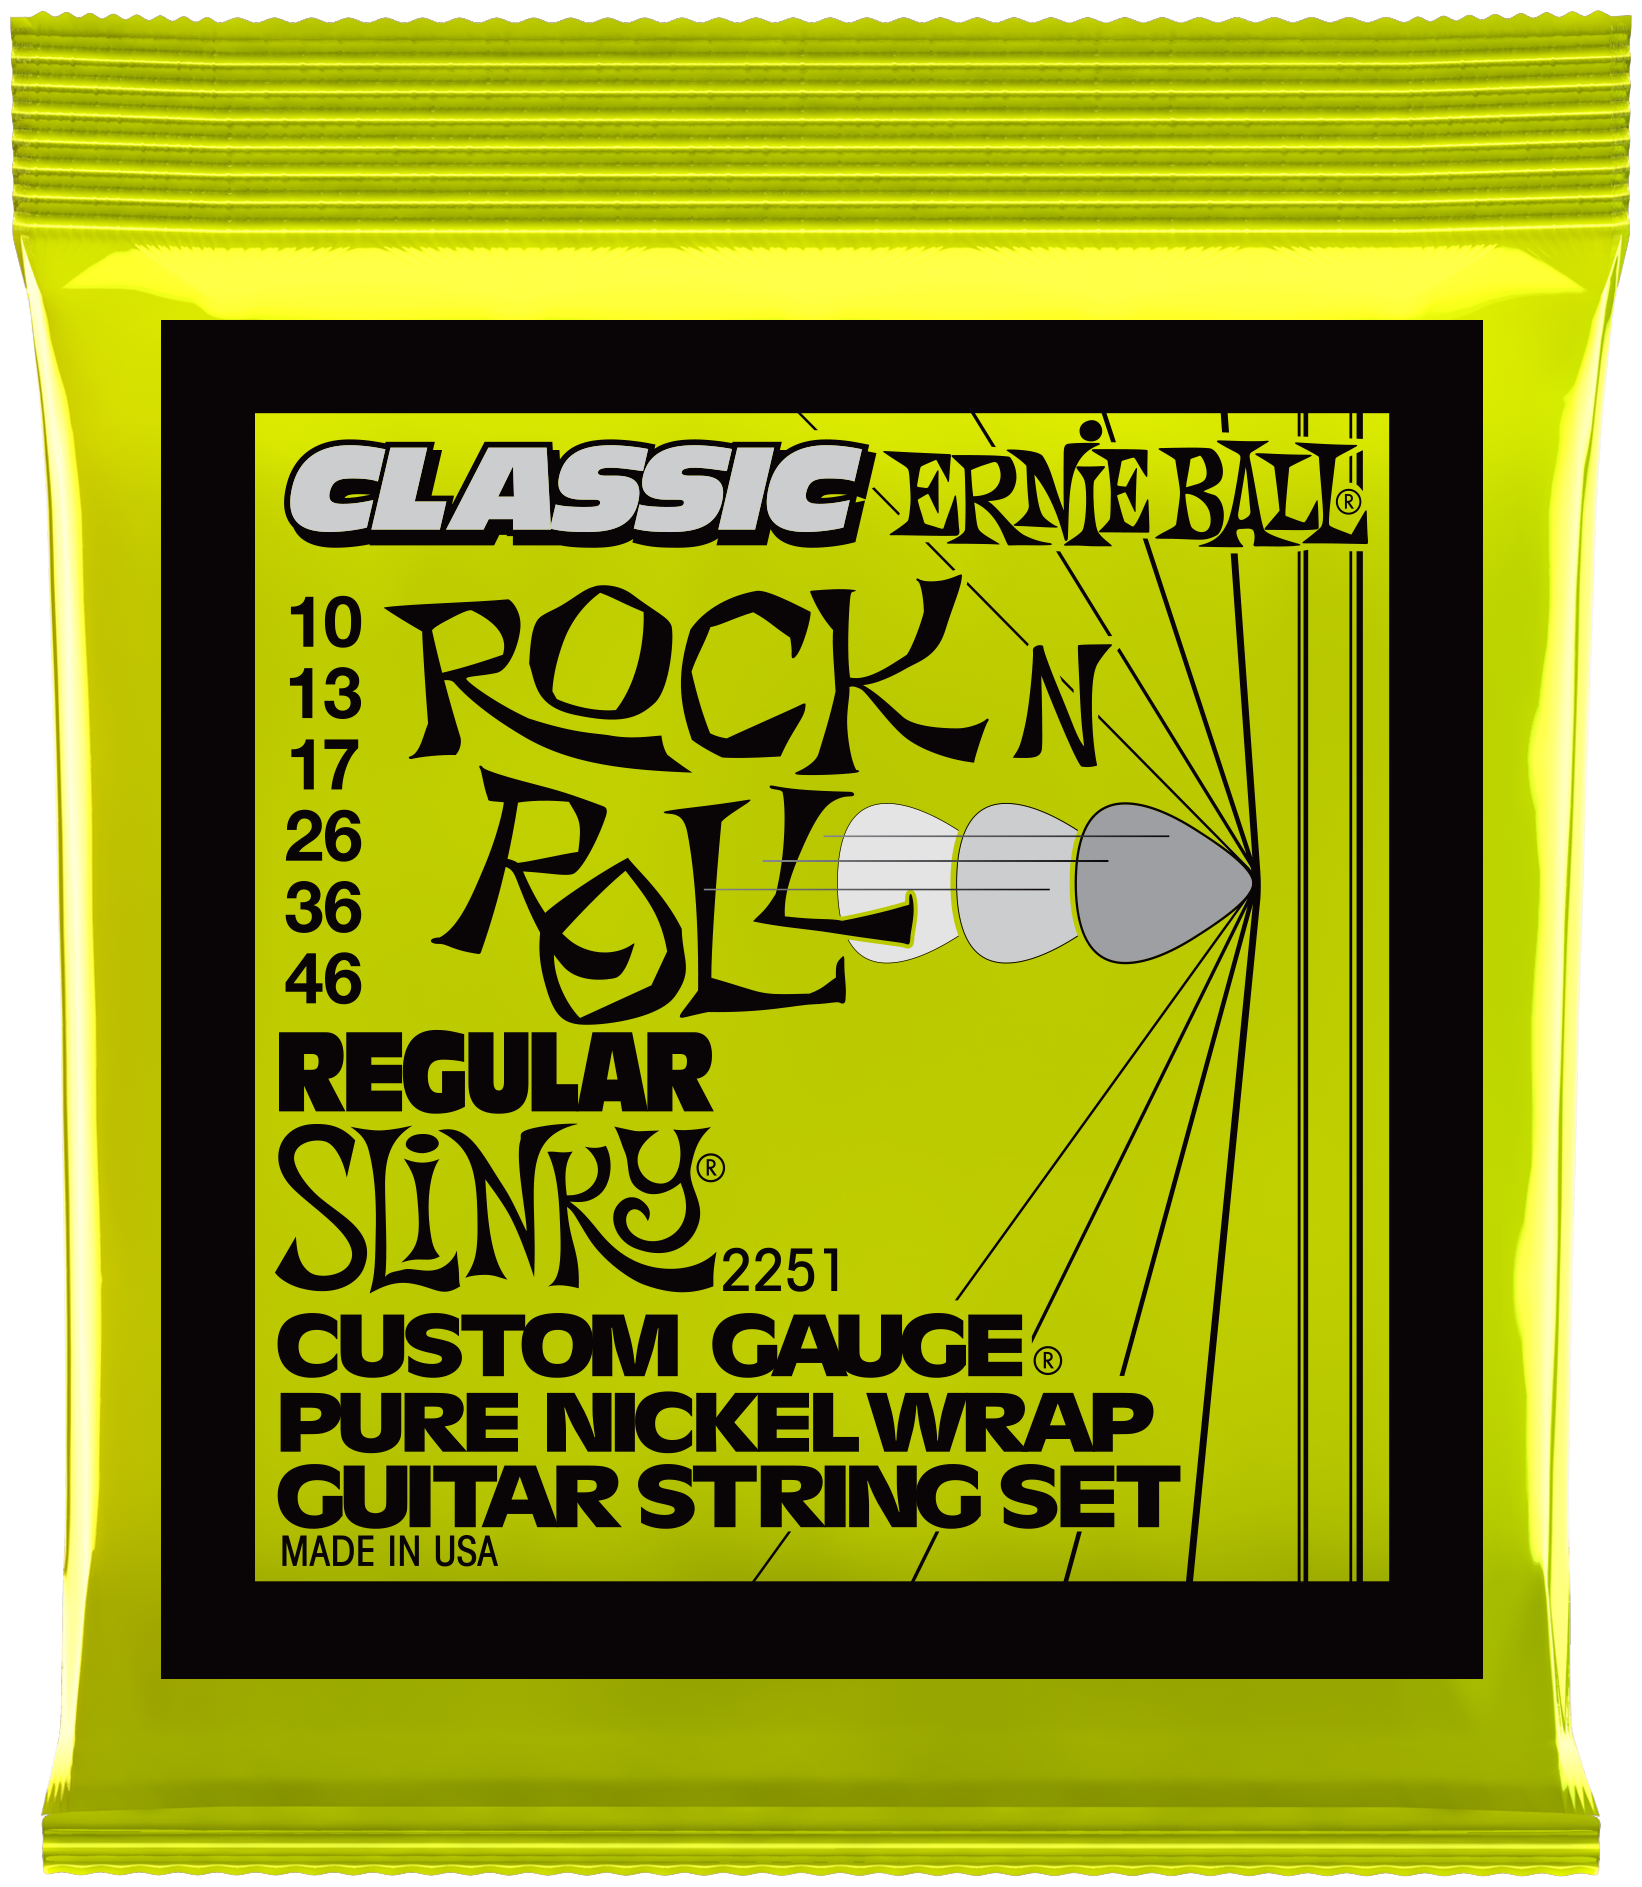 2251 Slinky Rock'N'Roll Regular 010-046